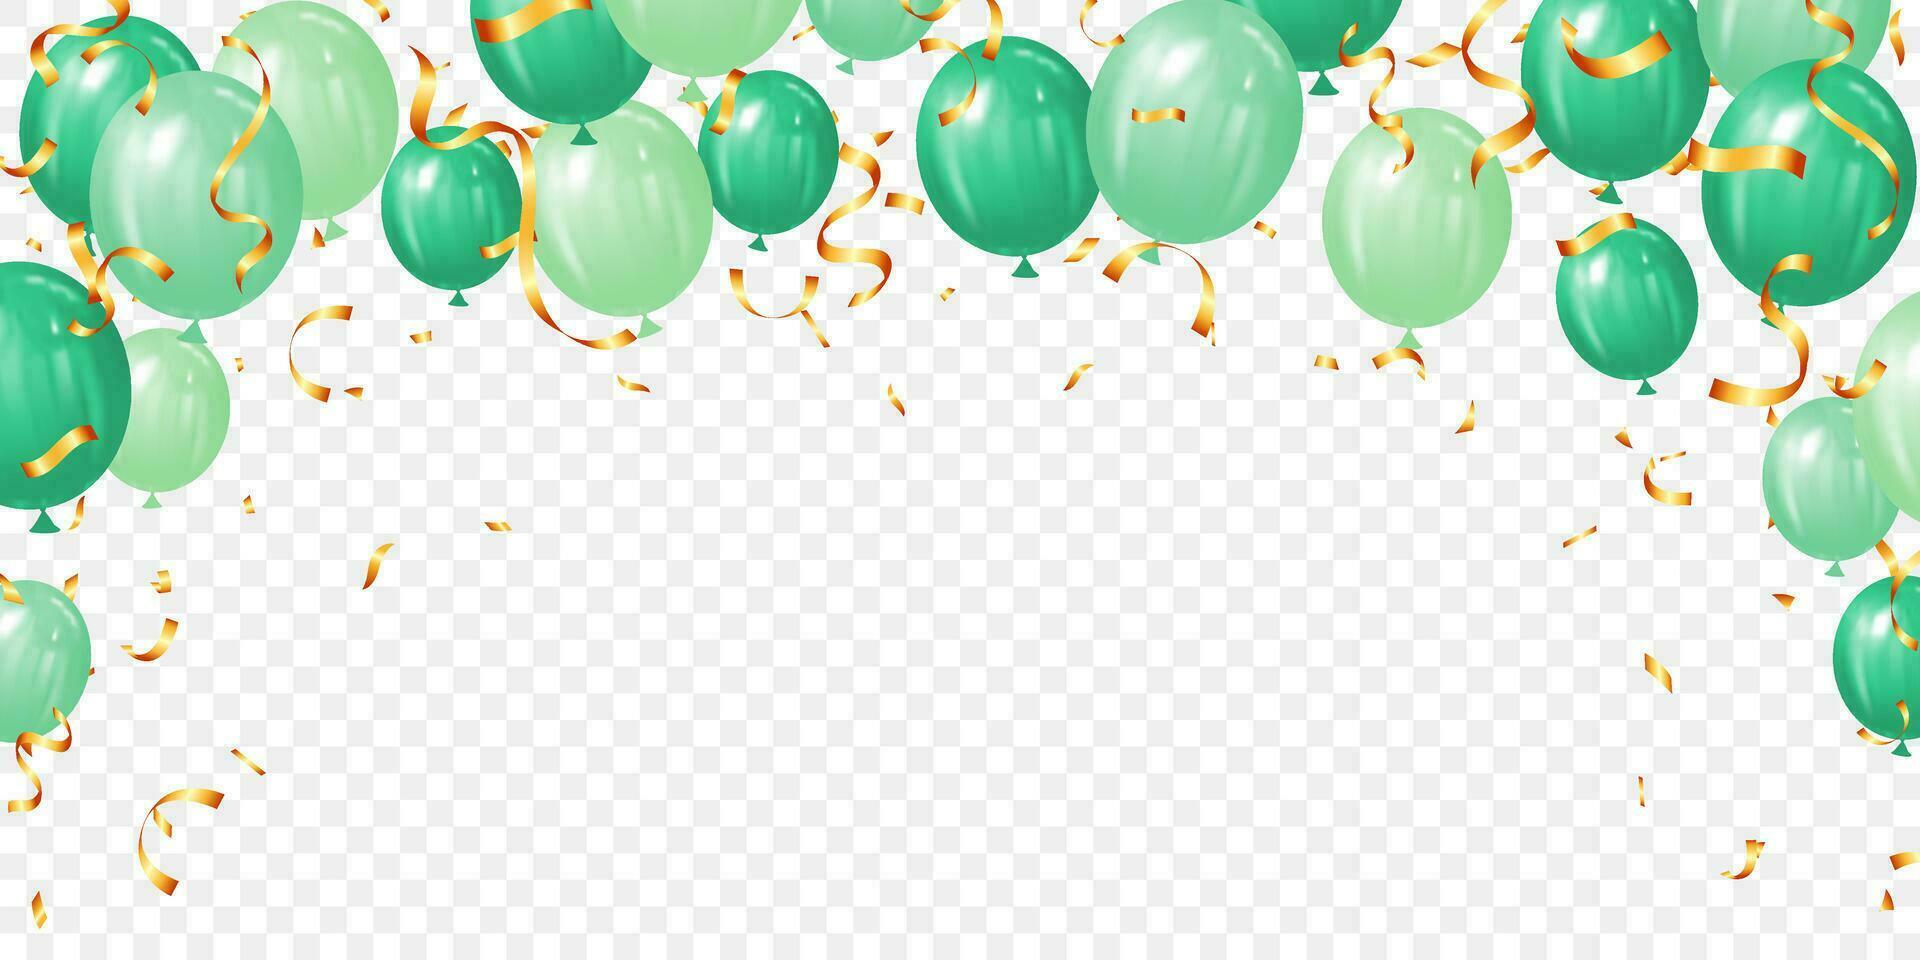 firande fest baner med grön ballonger bakgrund vektor illustration. kort lyx hälsning design